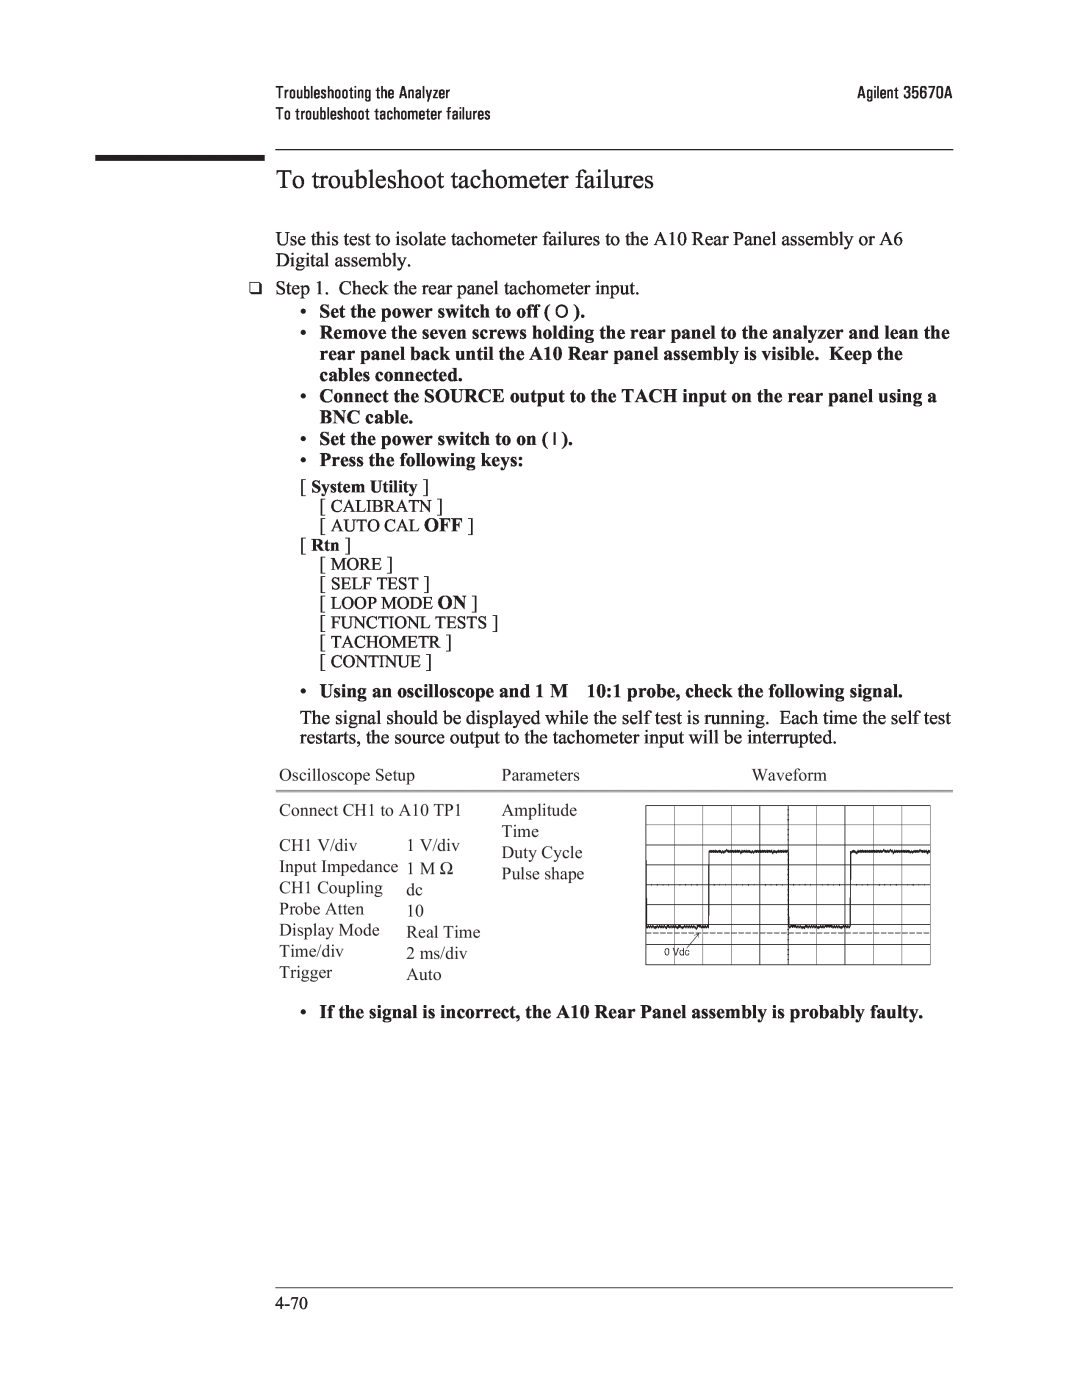 Agilent Technologies 35670-90066 manual To troubleshoot tachometer failures 